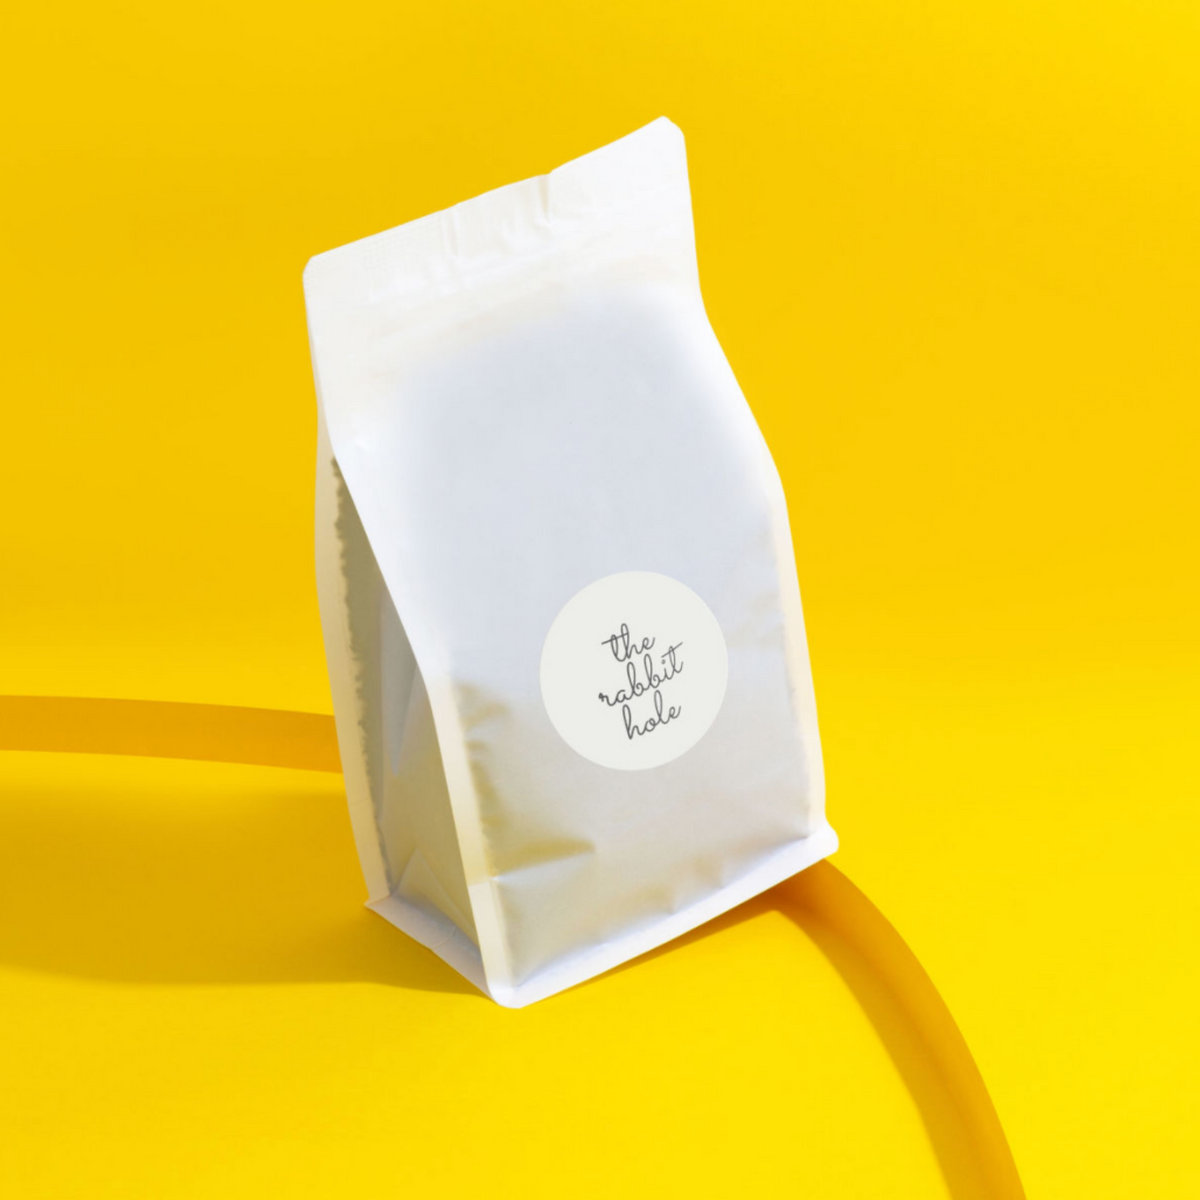 Bulk bag of loose leaf tea by The Rabbit Hole - Australian Made Tea on colourful yellow background.